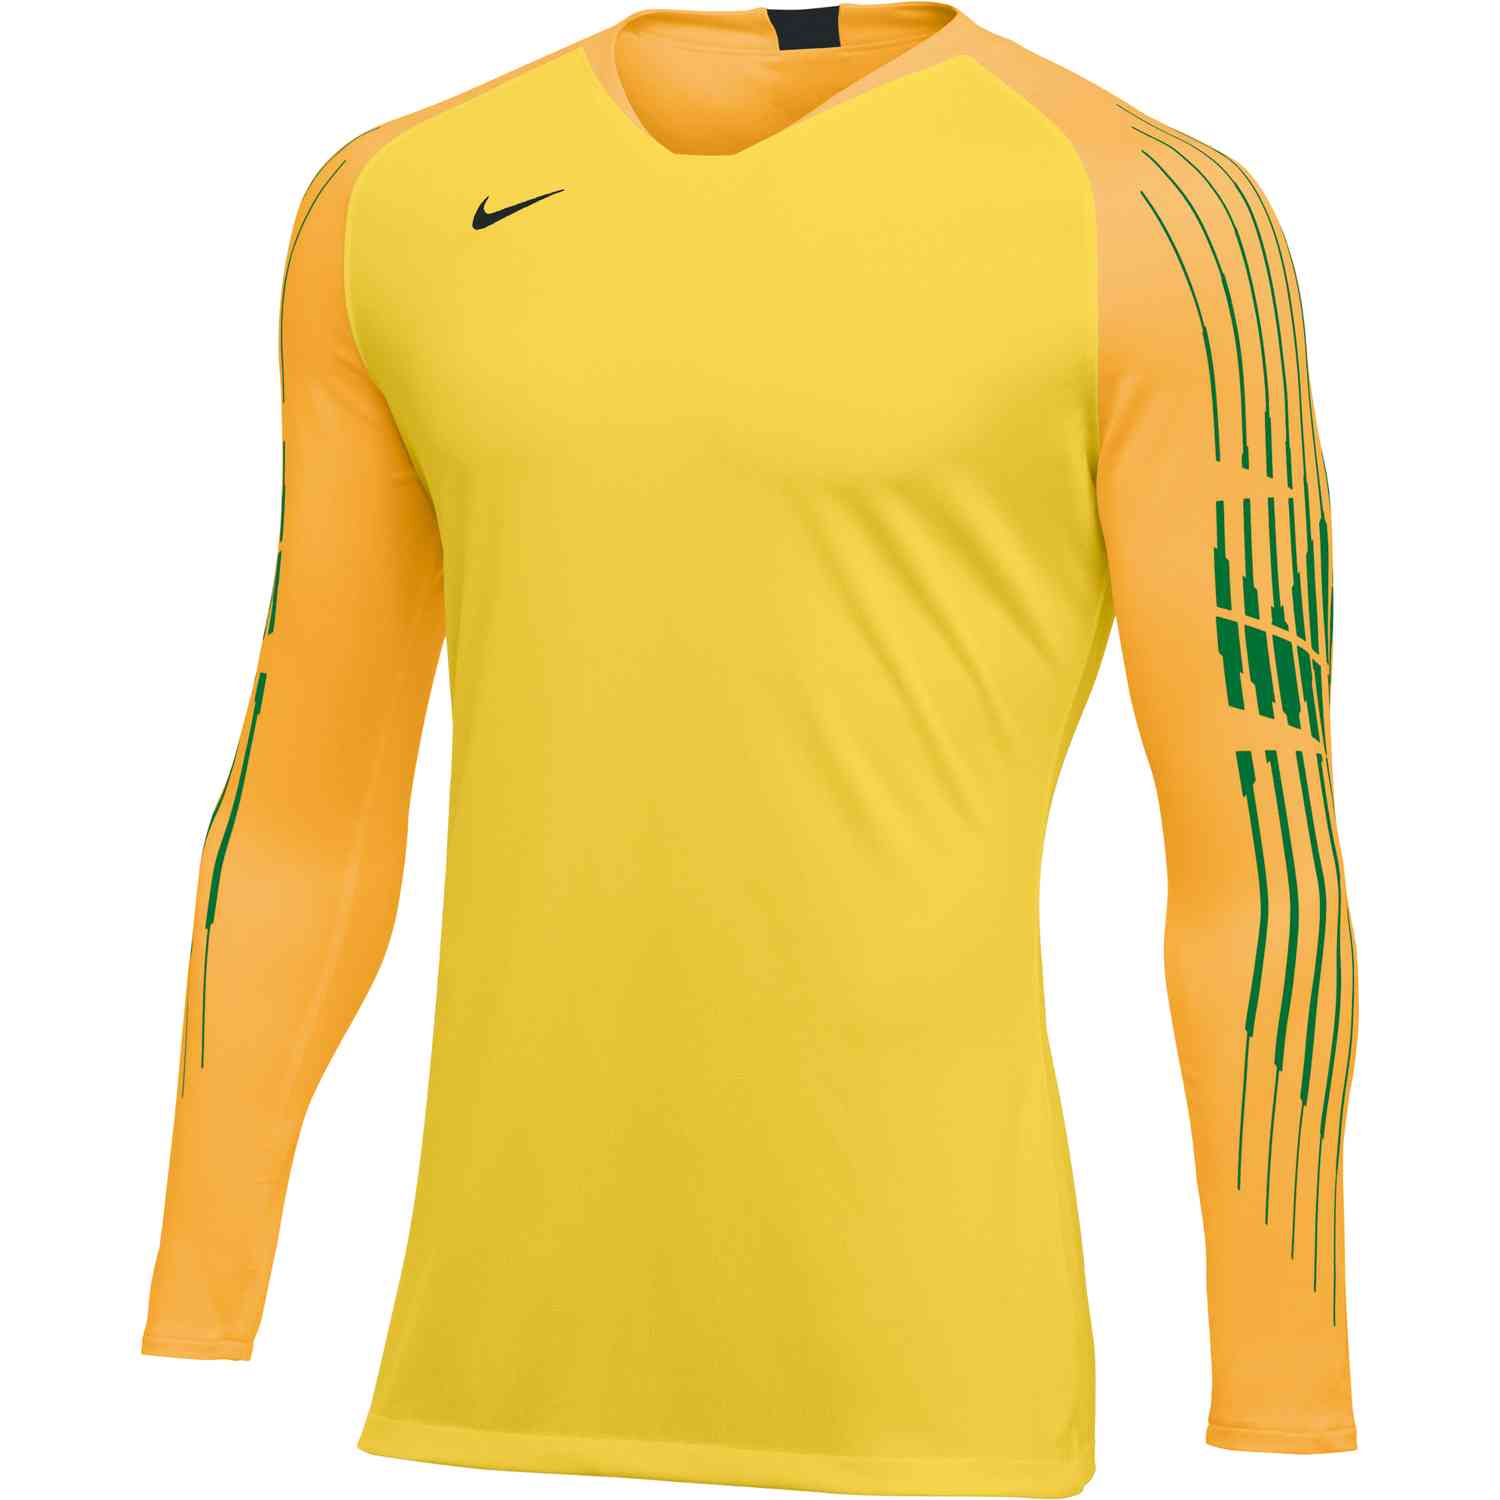 Nike Gardien II Jersey - Youth Tour Yellow/University Gold/Black SoccerPro